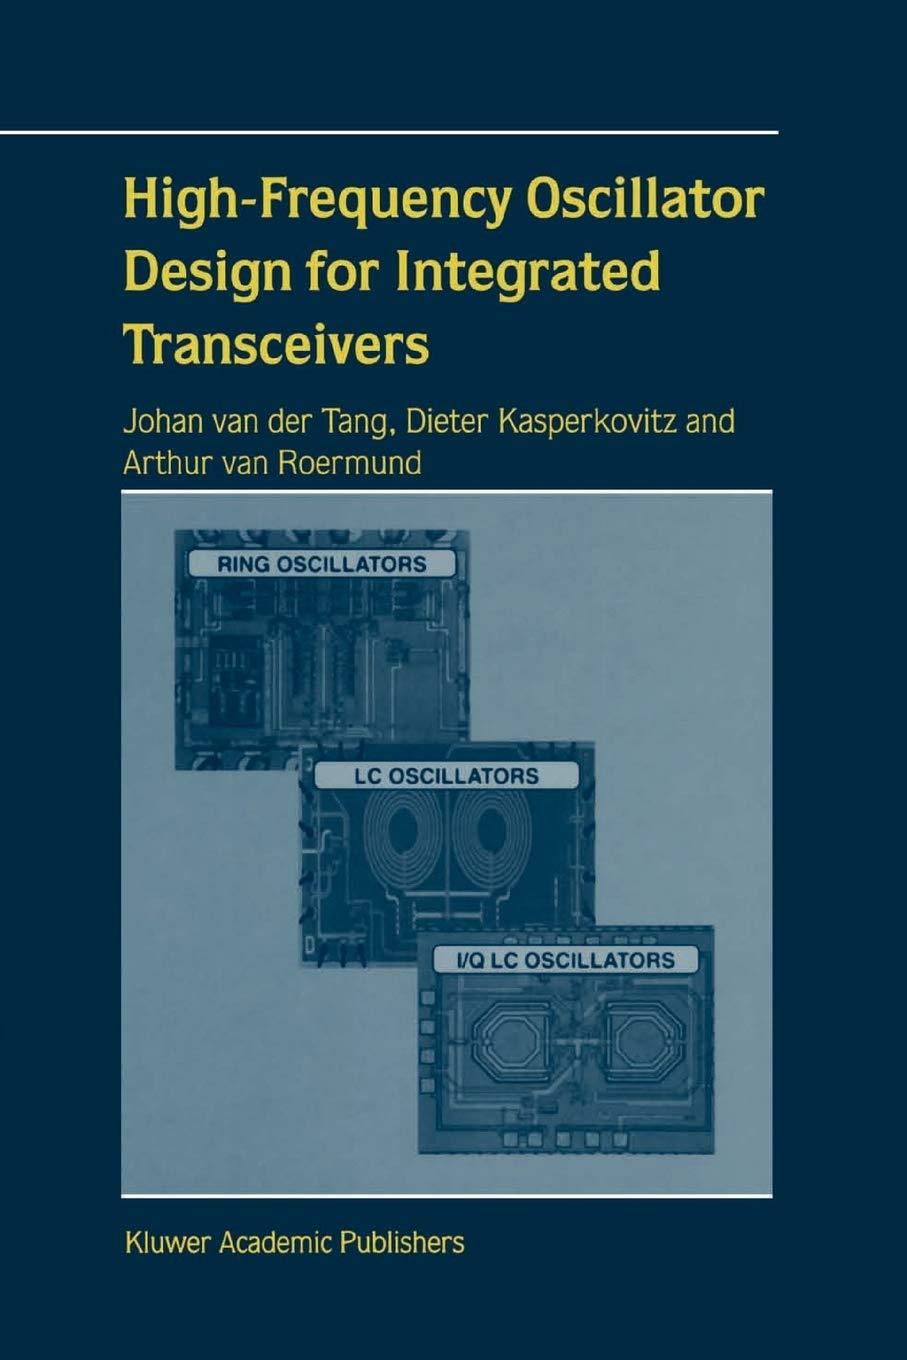 high frequency oscillator design for integrated transceivers 2003 edition j. van der tang, dieter